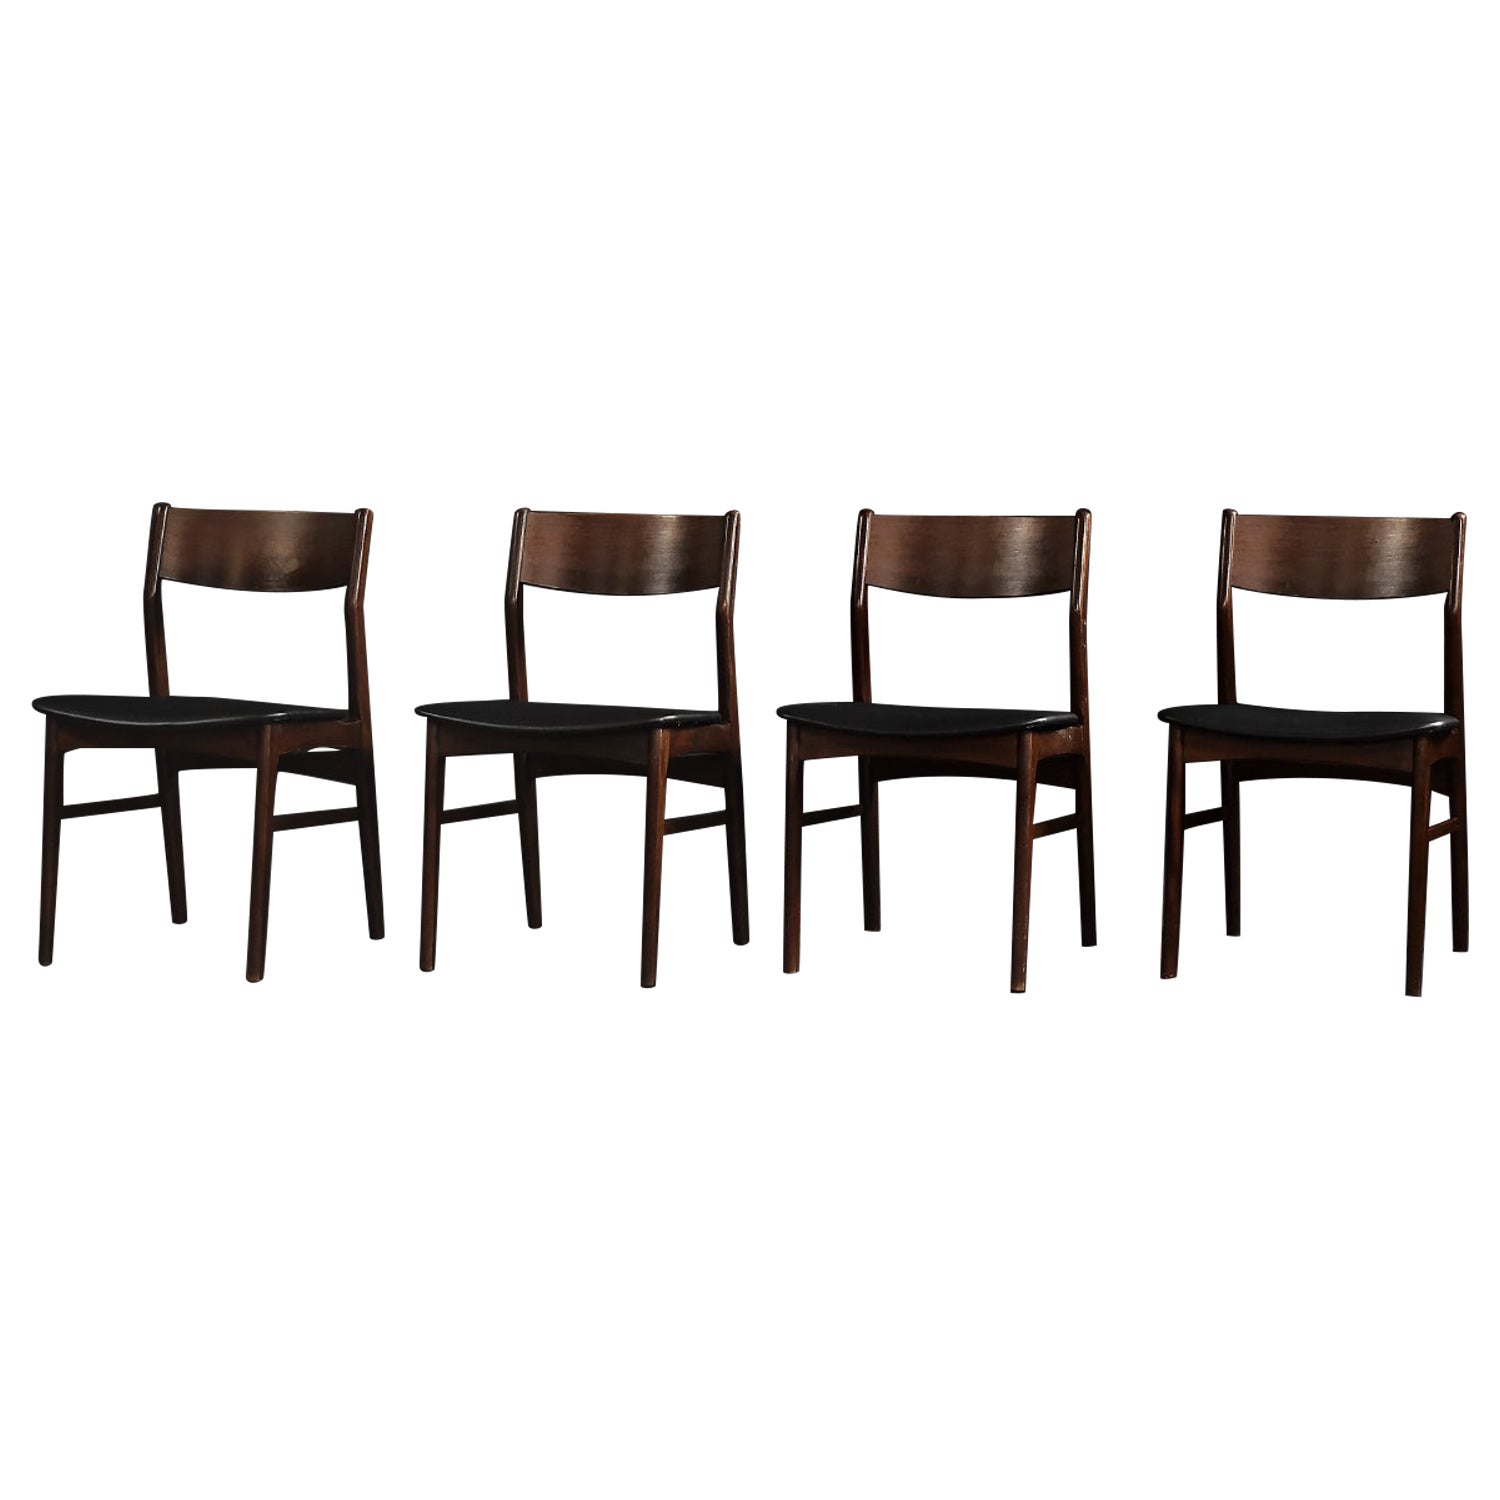 Set of 4 Vintage Midcentury Scandinavian Modern Dining Chairs in Beech&Rosewood